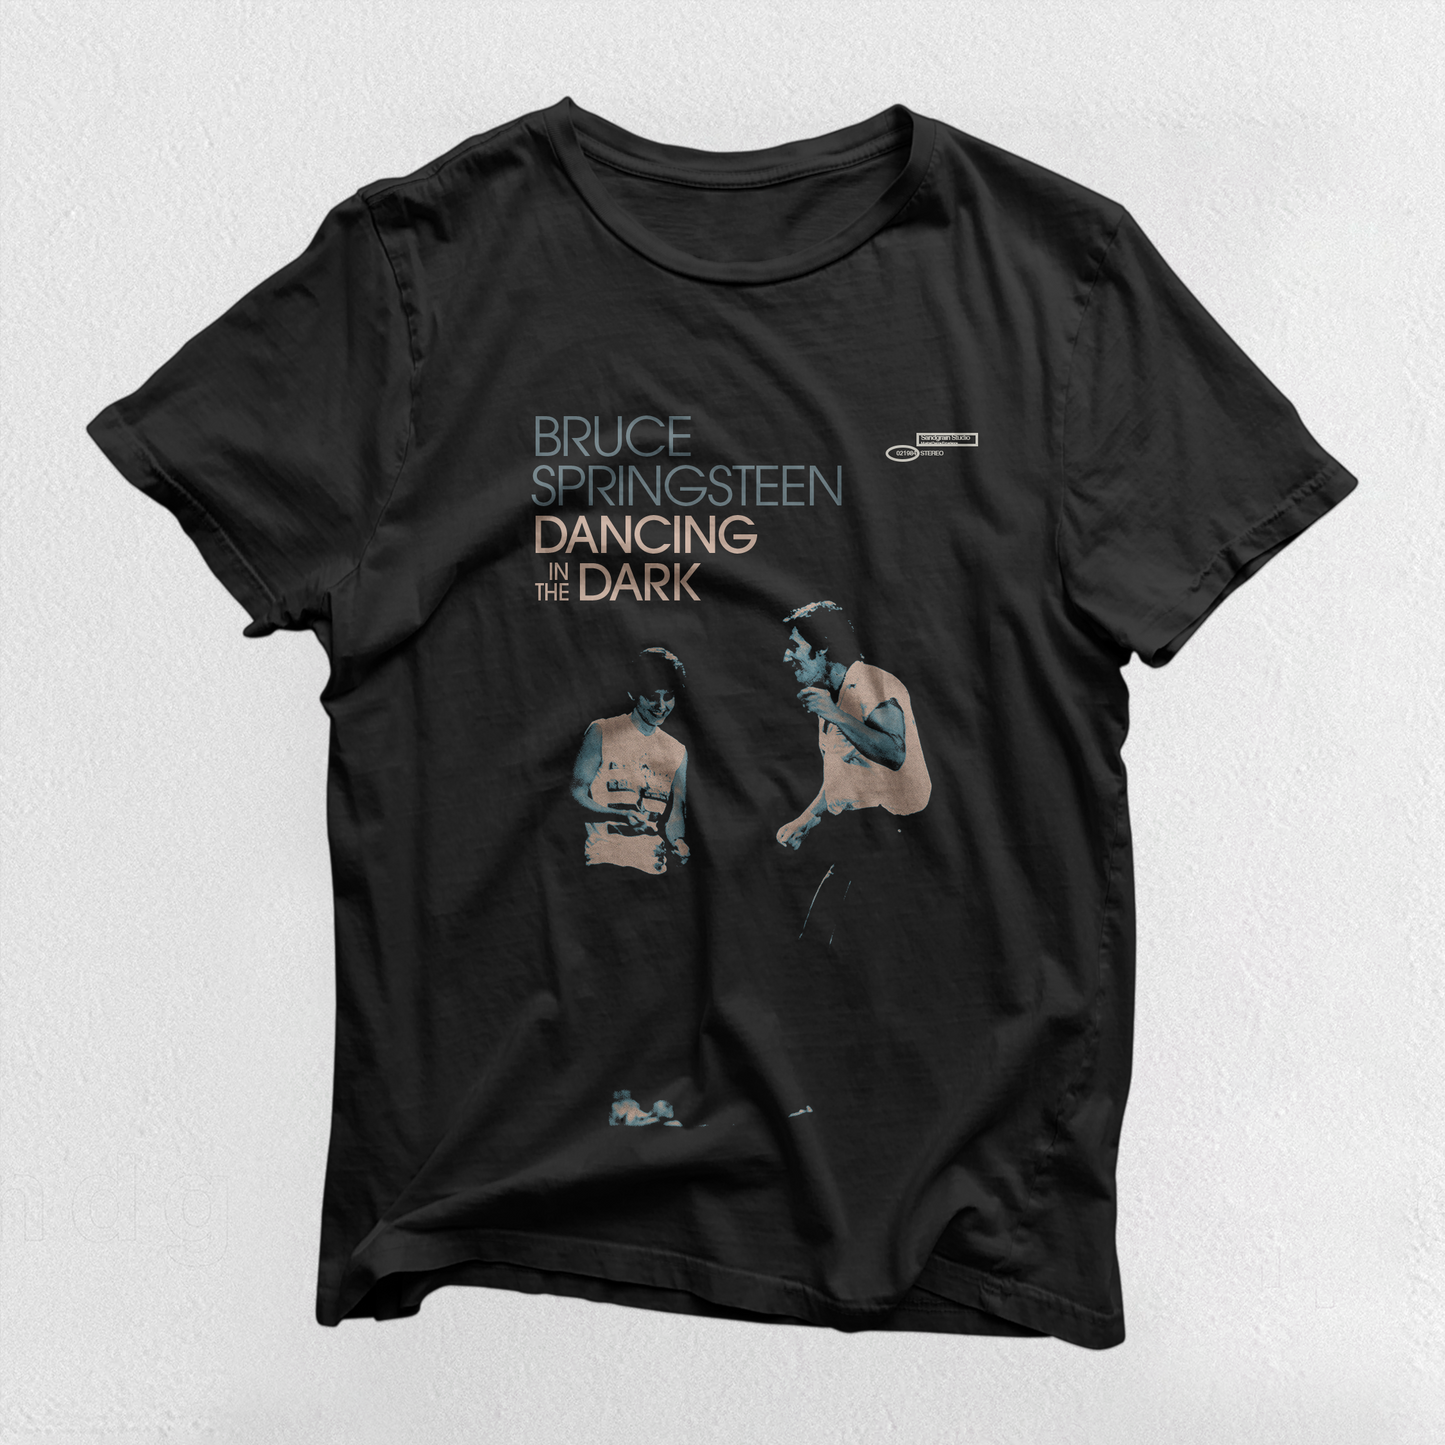 Bruce Springsteen shirt - Dancing in the Dark